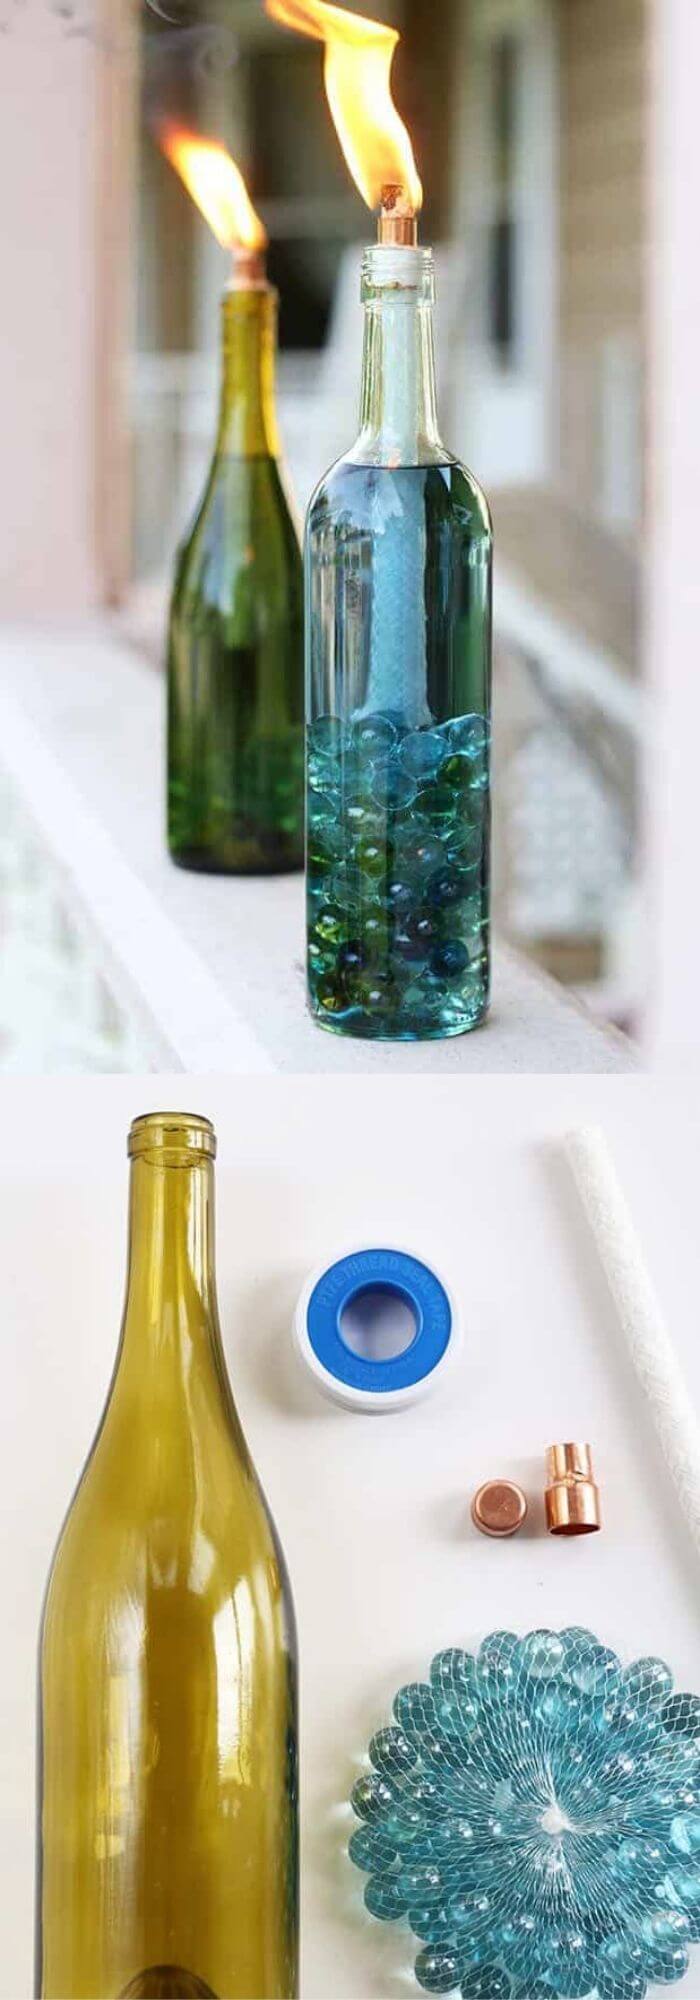 20 wine bottle craft ideas